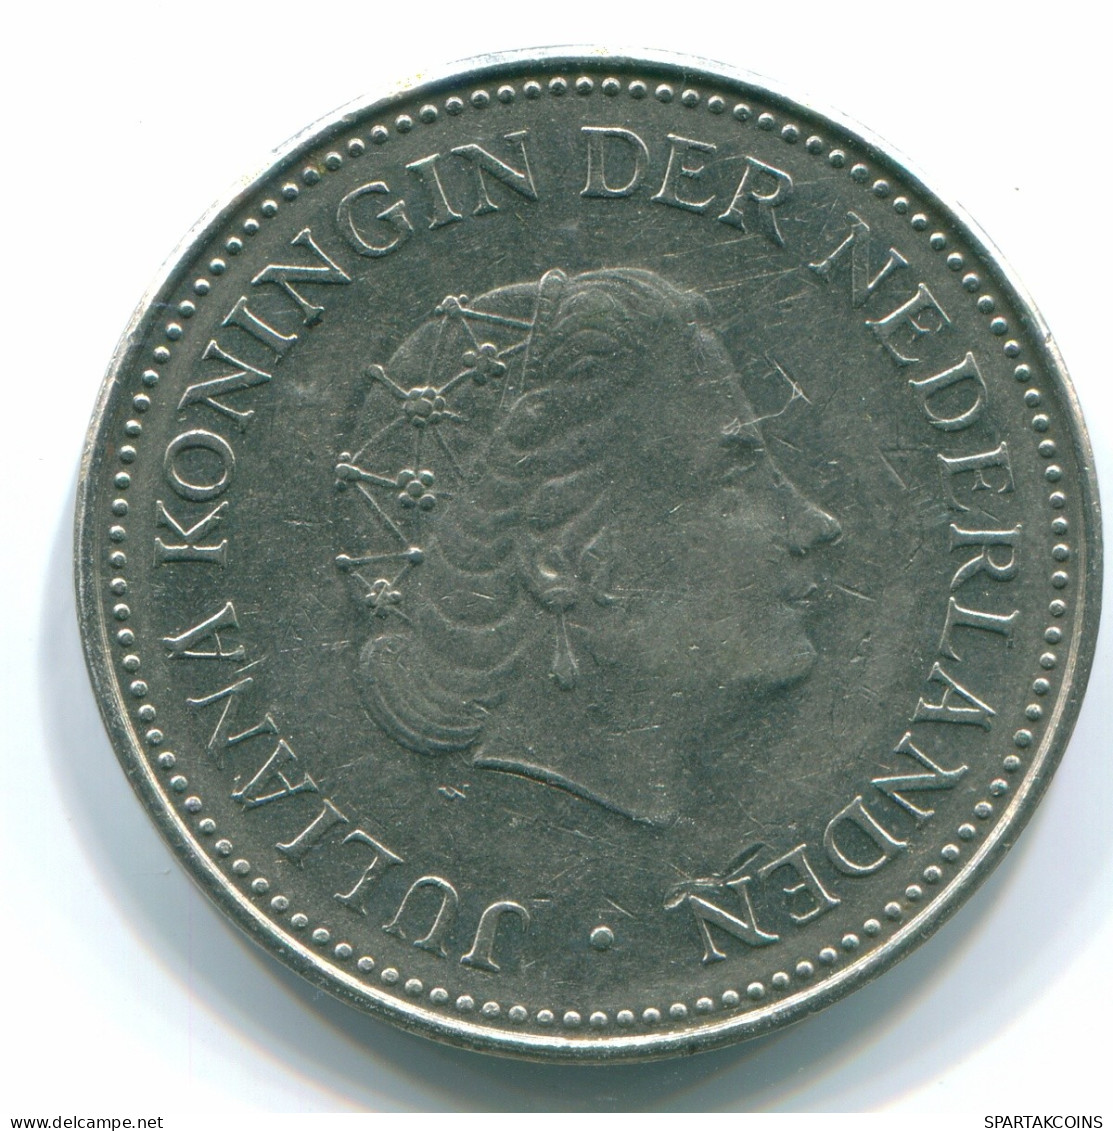 1 GULDEN 1971 NETHERLANDS ANTILLES Nickel Colonial Coin #S11947.U.A - Nederlandse Antillen